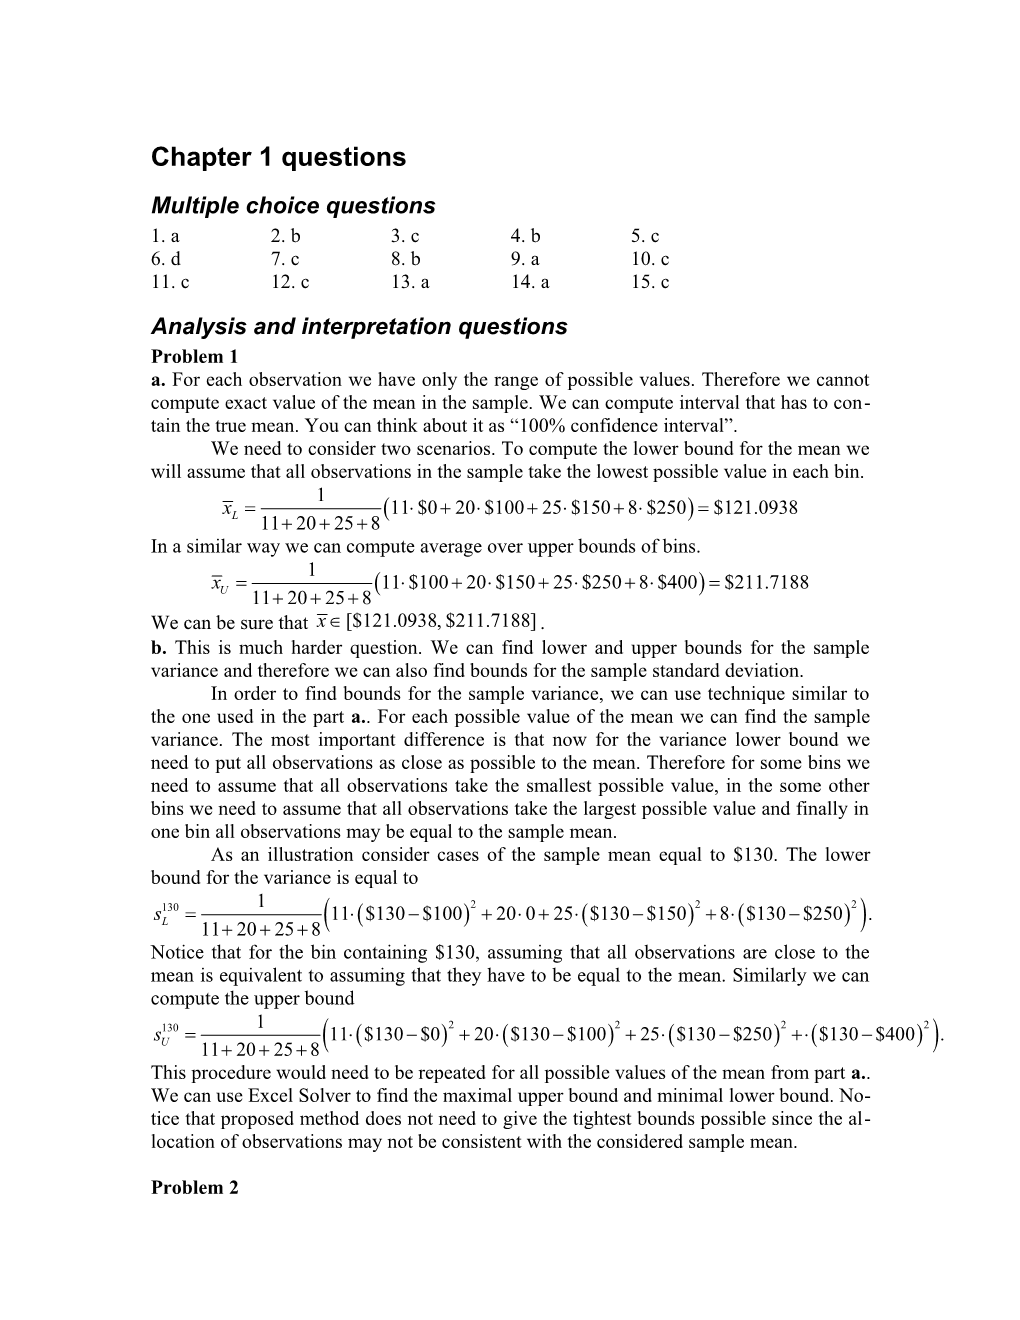 Analysis and Interpretation Questions